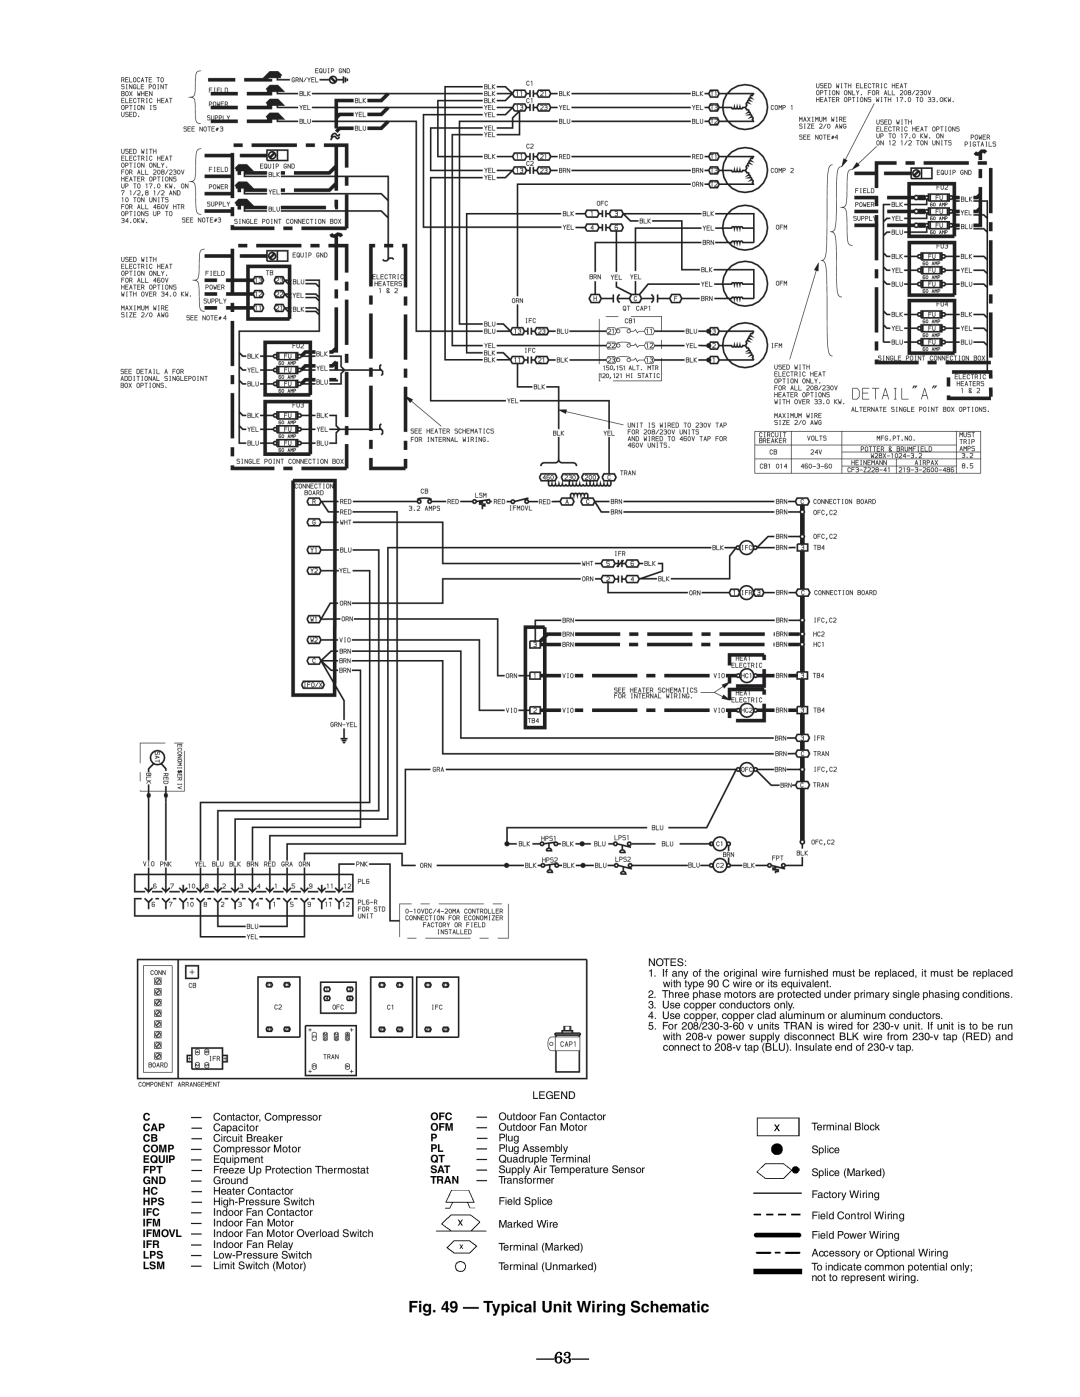 Bryant 558F installation instructions Typical Unit Wiring Schematic 